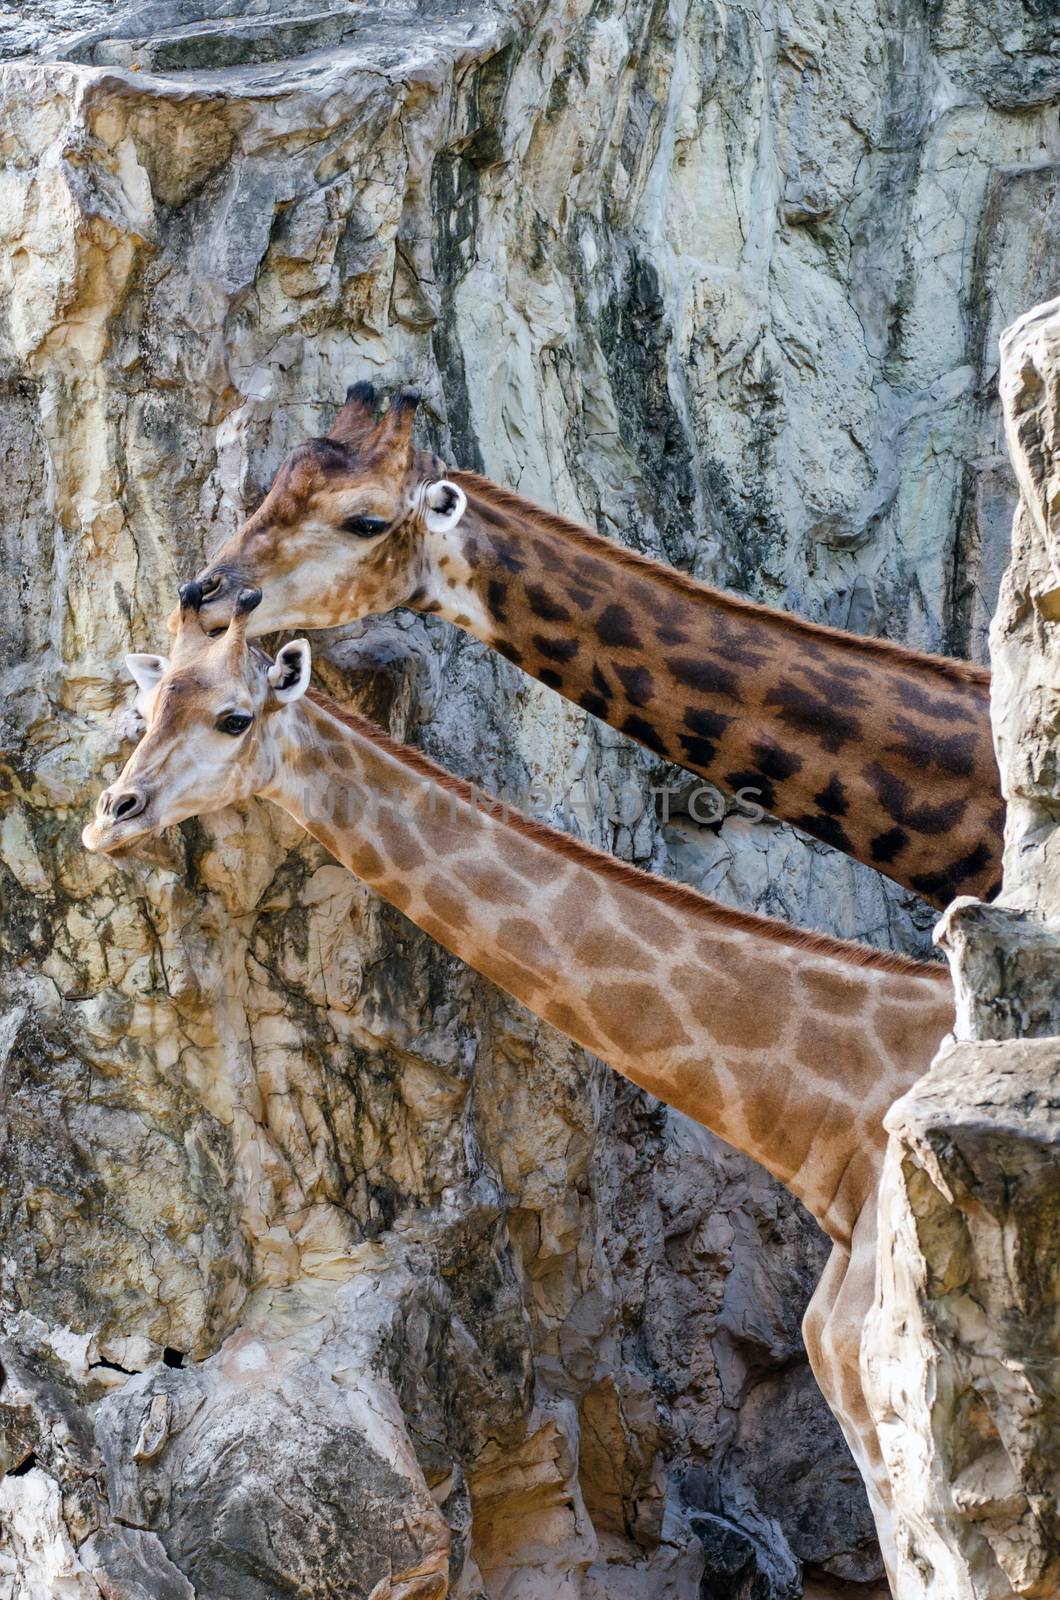 Two giraffes in zoo by siraanamwong